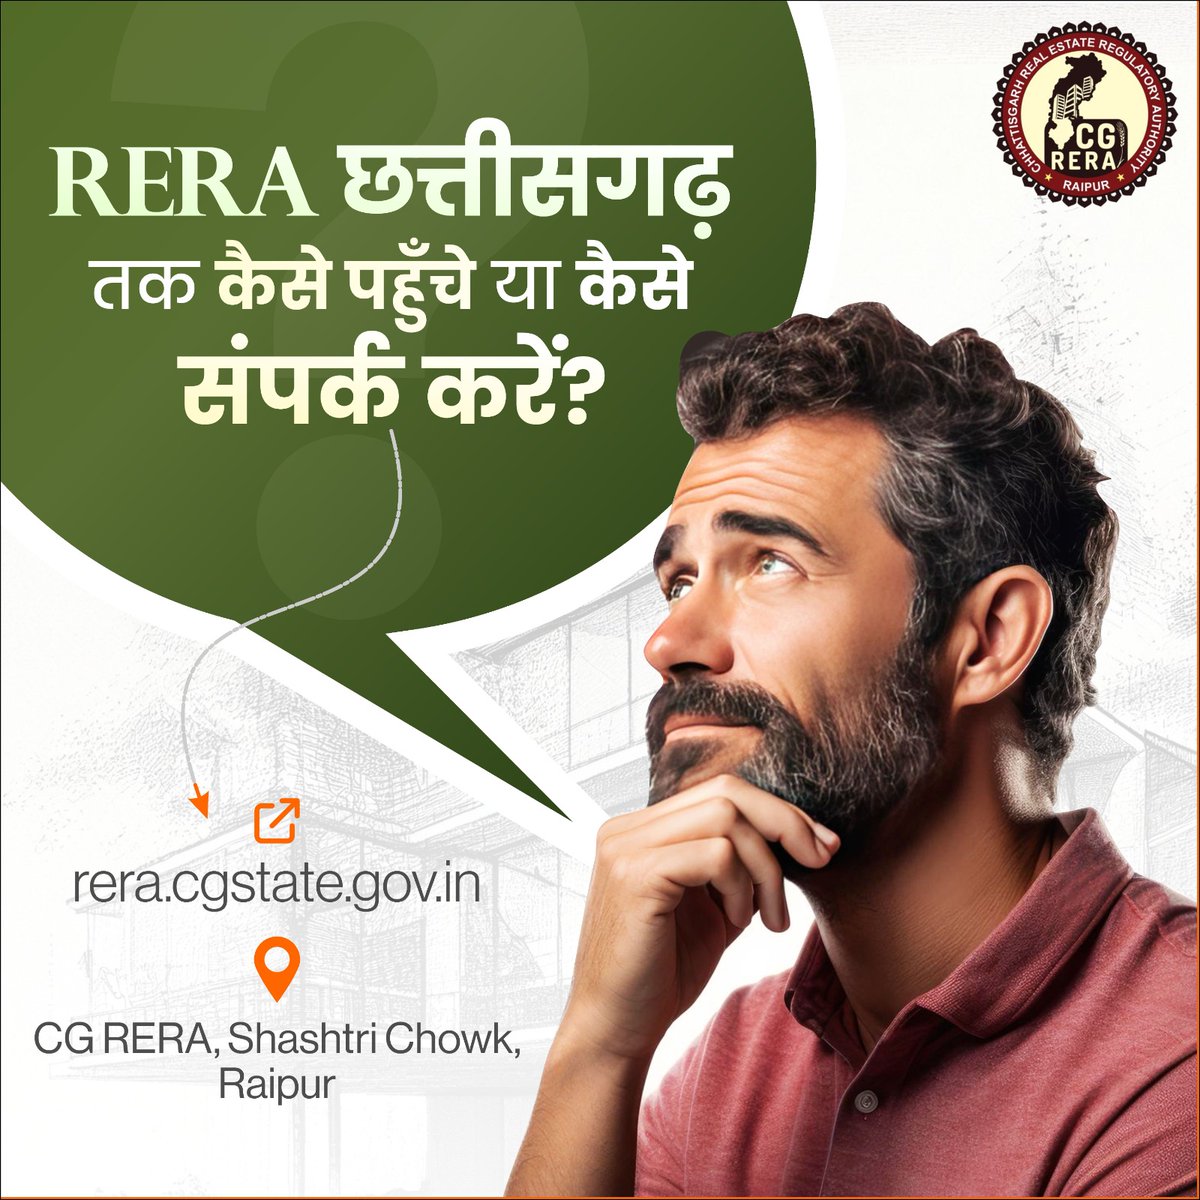 अब RERA छत्तीसगढ़ तक पहुॕंचना हुआ आसान-

🌐 rera.cgstate.gov.in
📞 CG RERA, शास्त्री चौक, रायपुर

#RERAAdvantages #rera #realestate #property #realty  #housing #indianrealestate #home #luxuryhomes #dreamhome #realestateregulatoryact #regulatory #buyer #seller #reracg